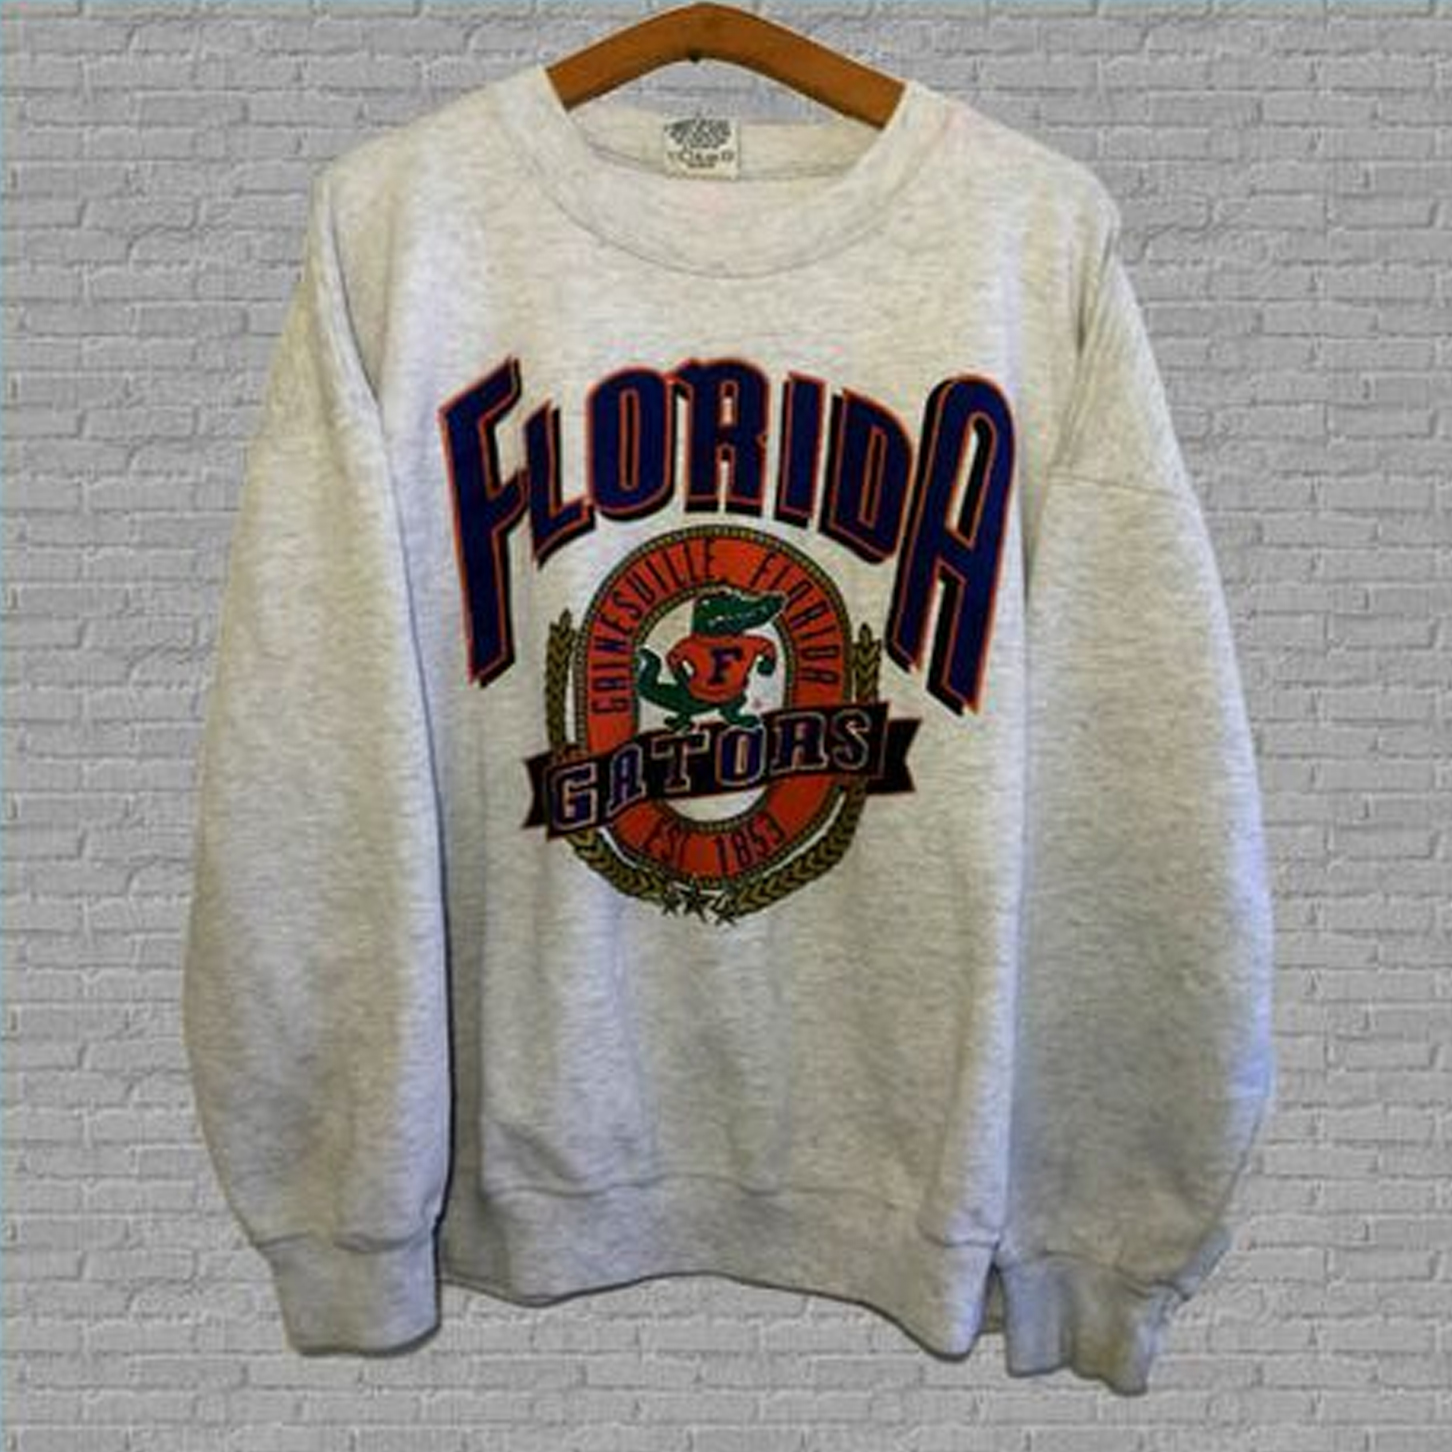 florida gators crewneck sweatshirt